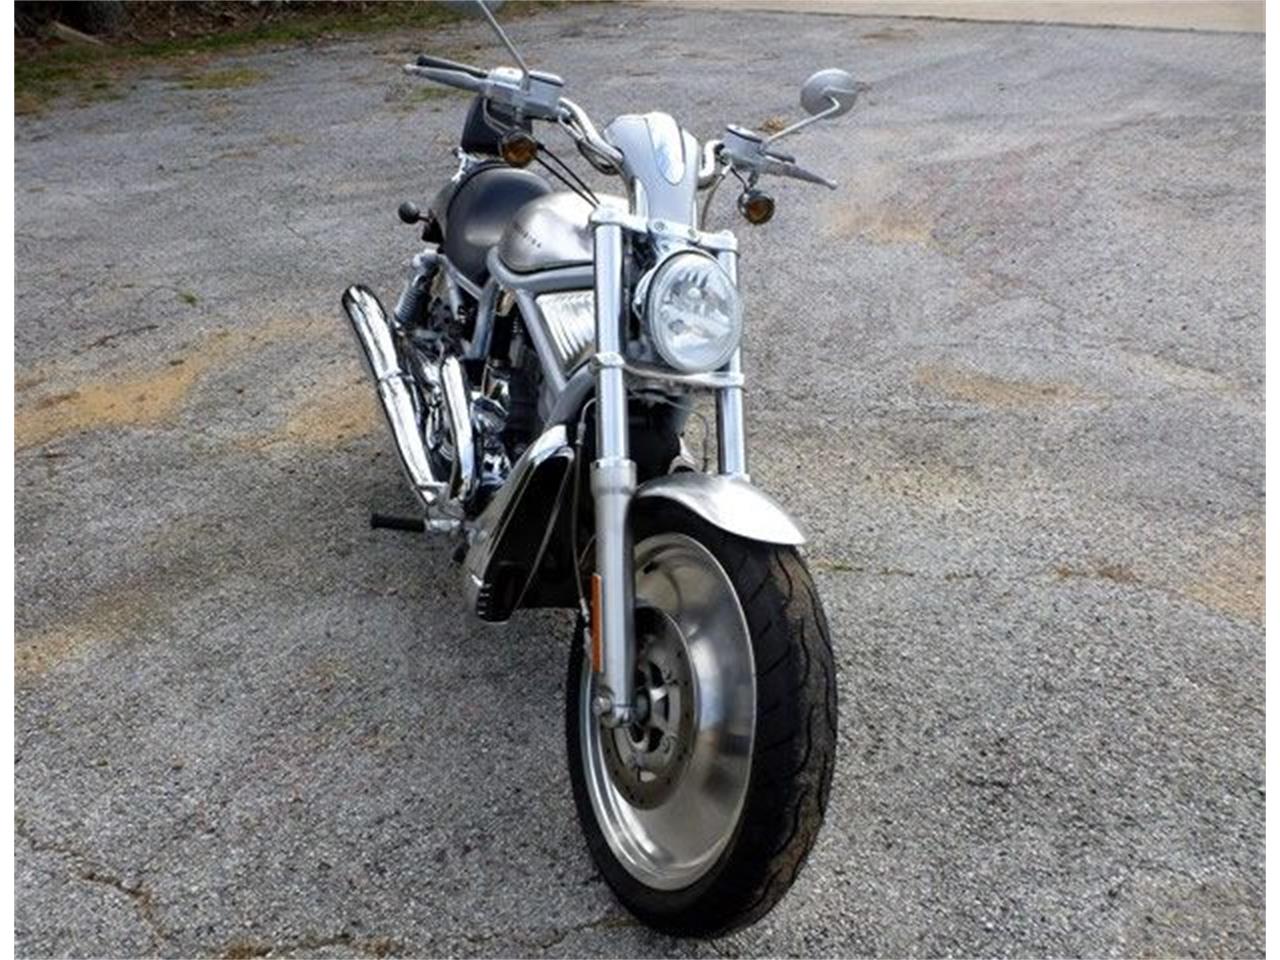 2002 Harley-Davidson V-Rod for Sale | ClassicCars.com | CC-1220225